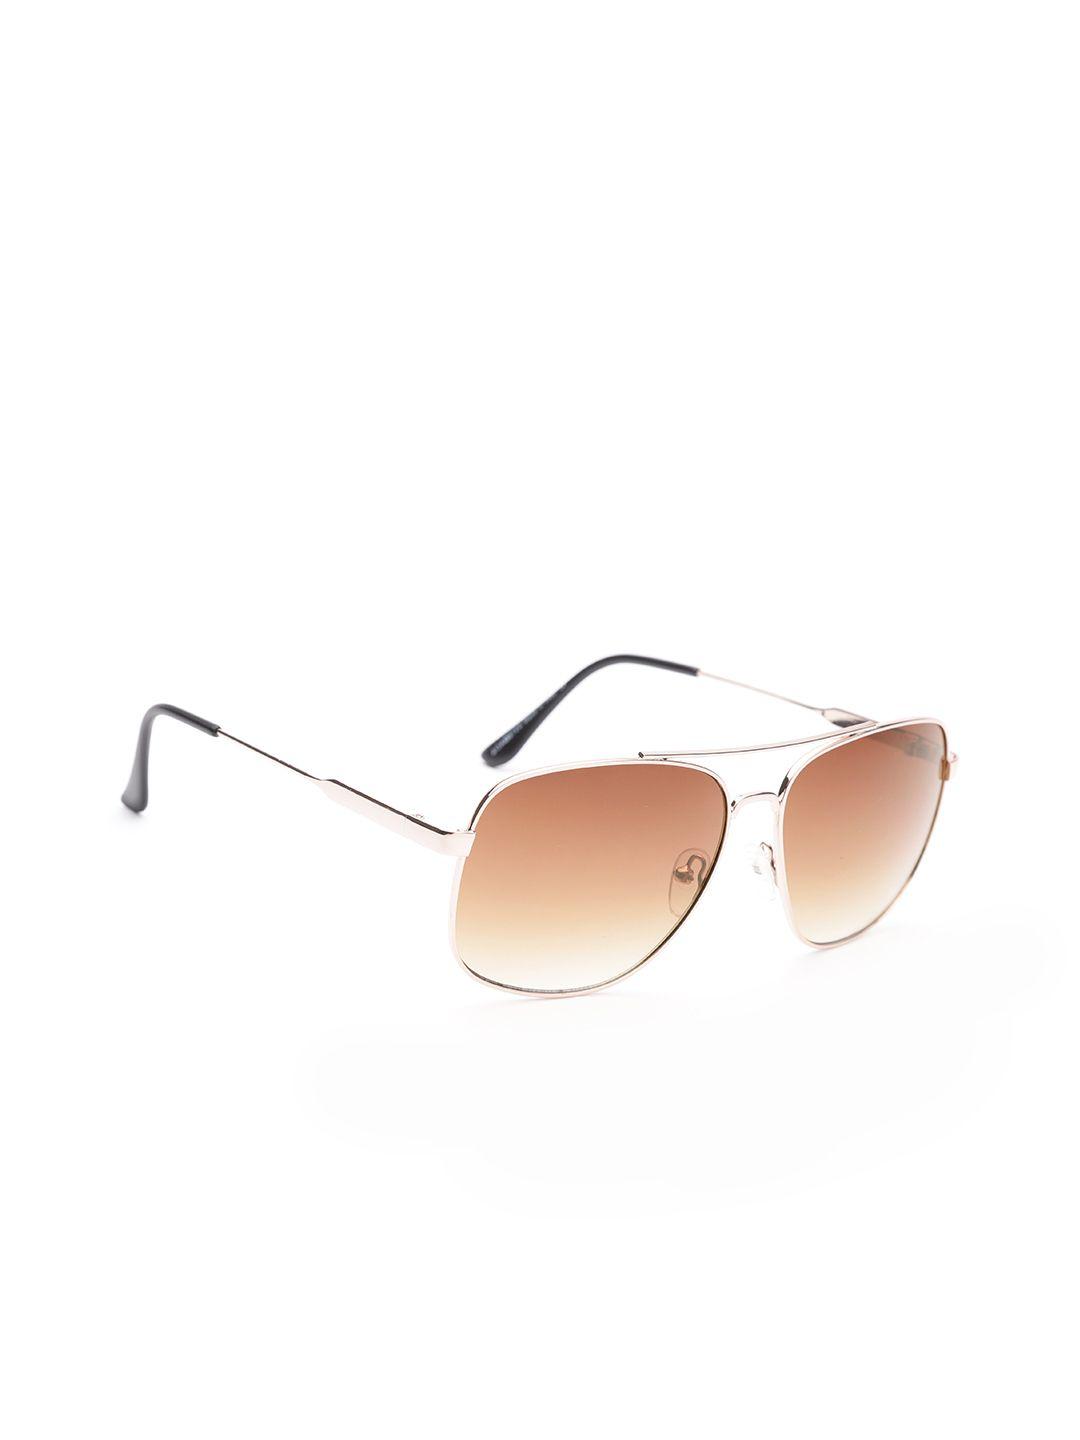 roadster-unisex-square-sunglasses-mfb-pn-ps-b0335